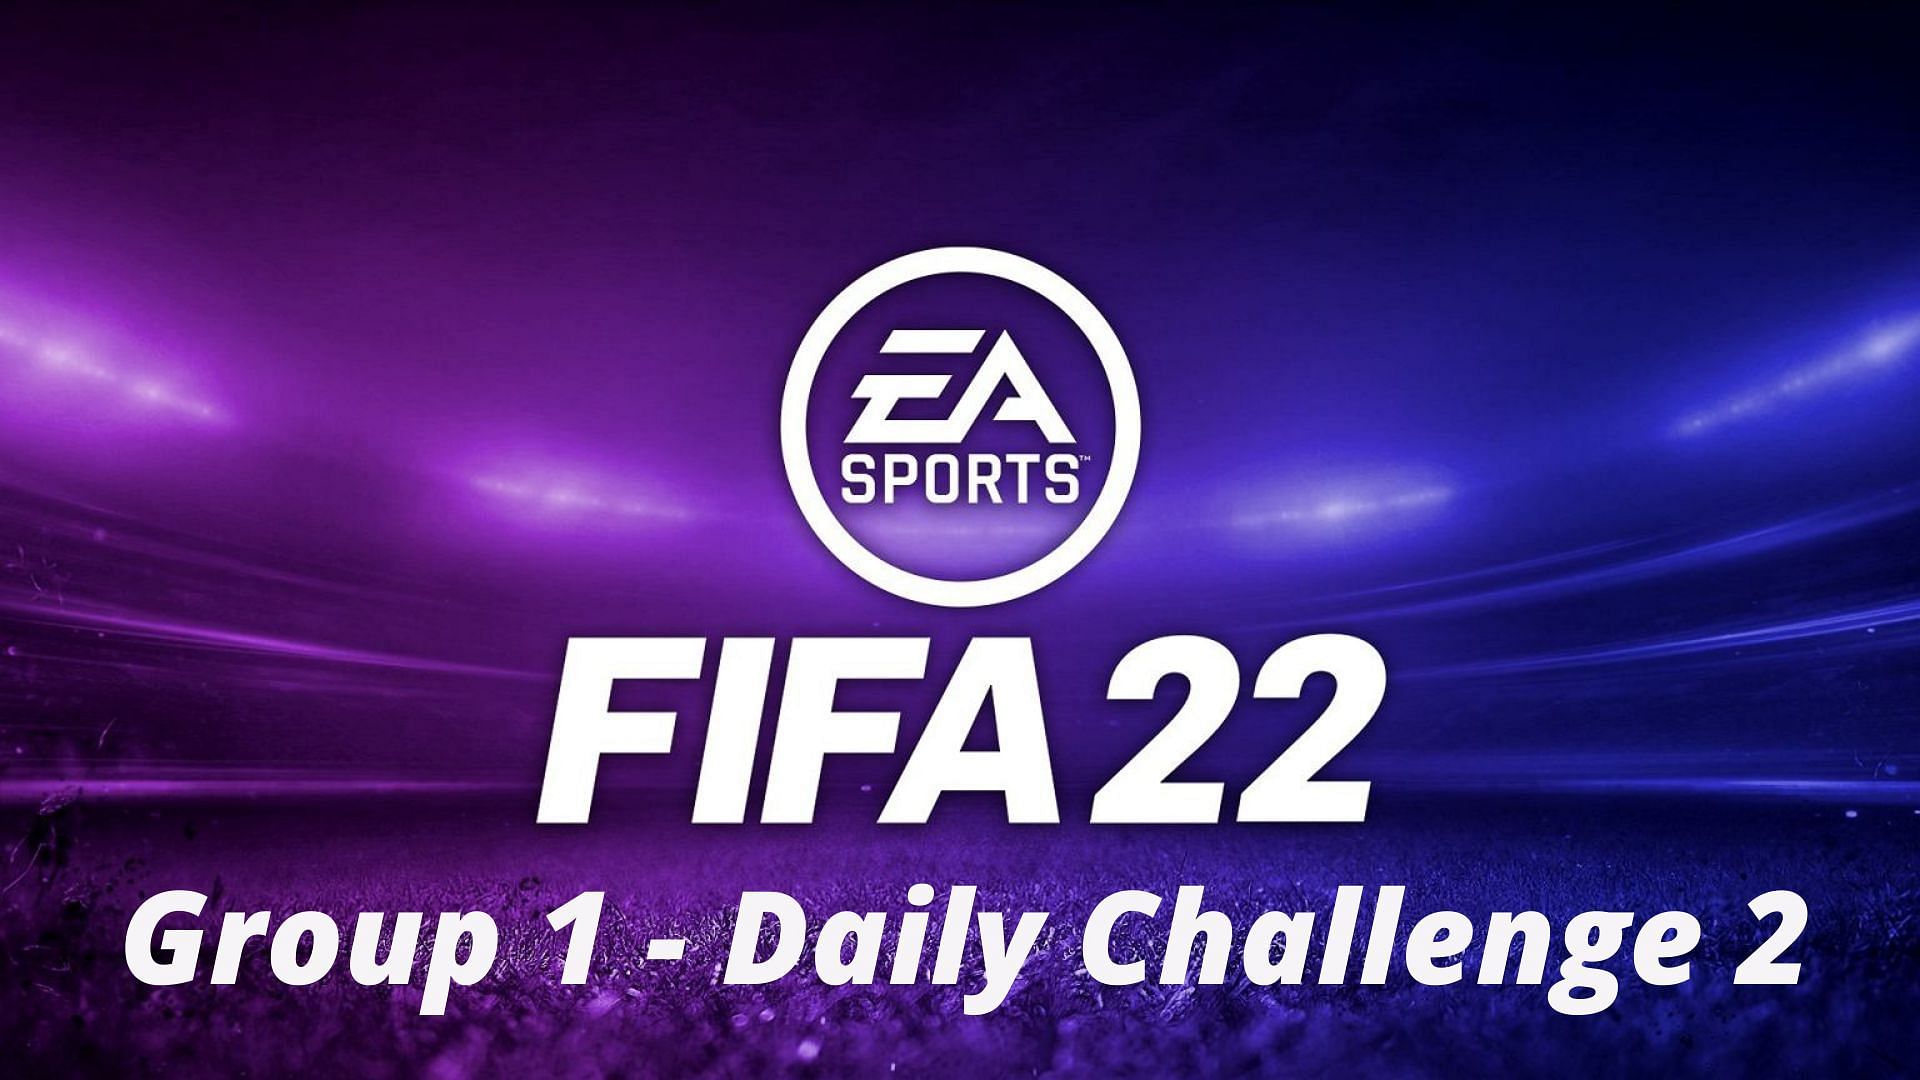 Group 1 Daily Challenge 2 SBC is now live (Image via Sportskeeda)